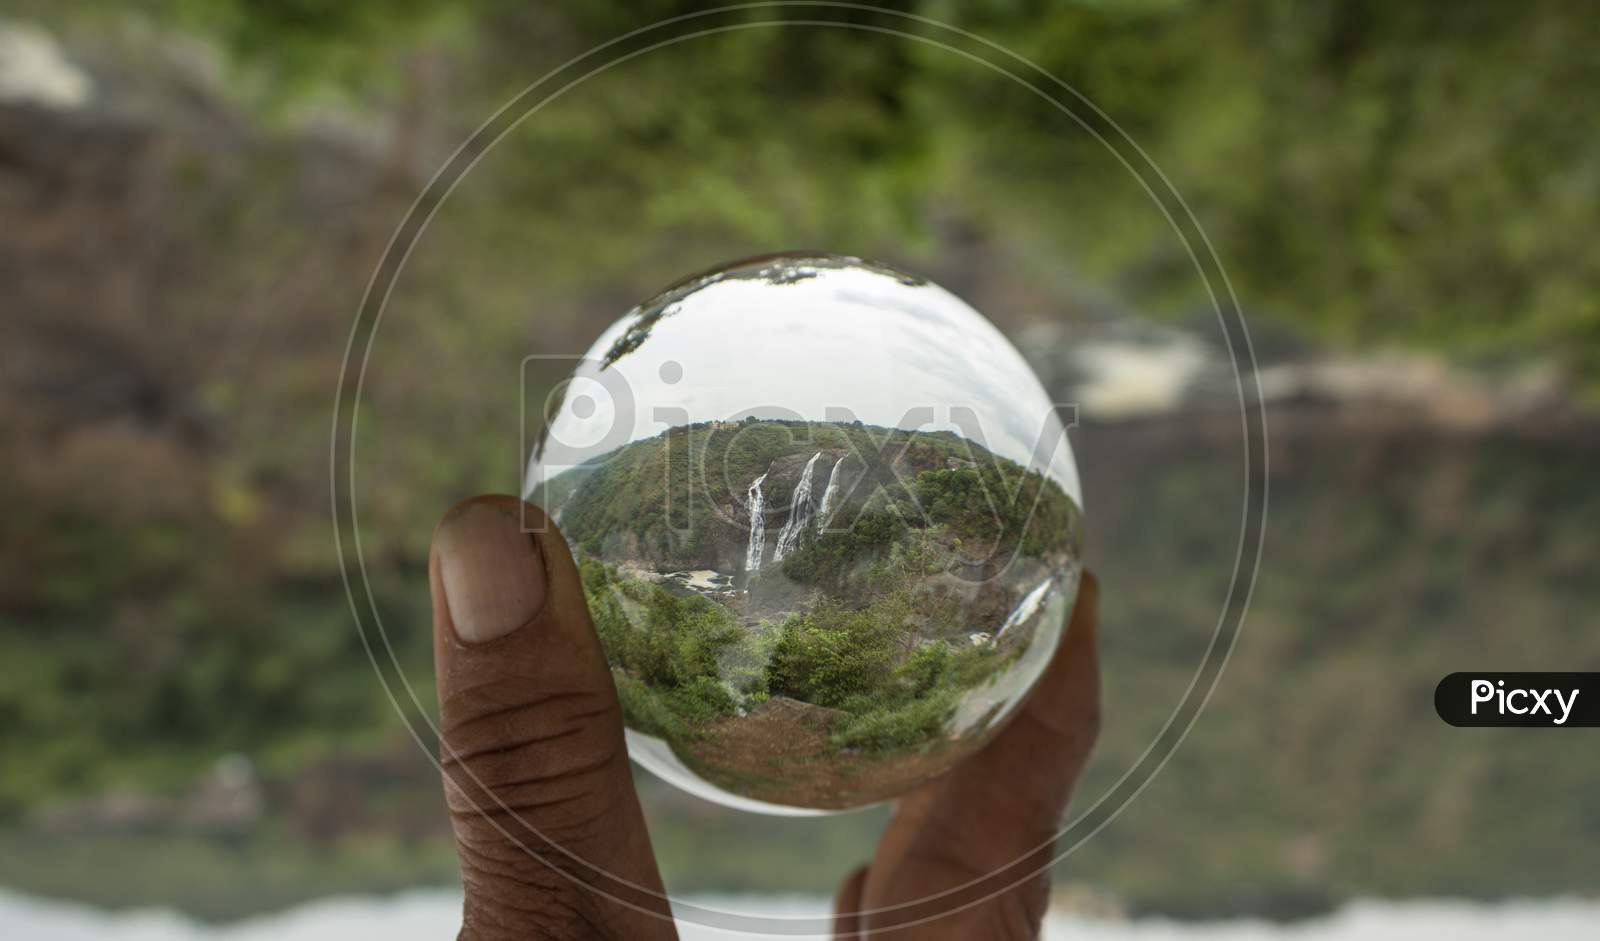 Shimsha waterfall seen through a Crystal ball in Shivanasamudra/Karnataka/India.